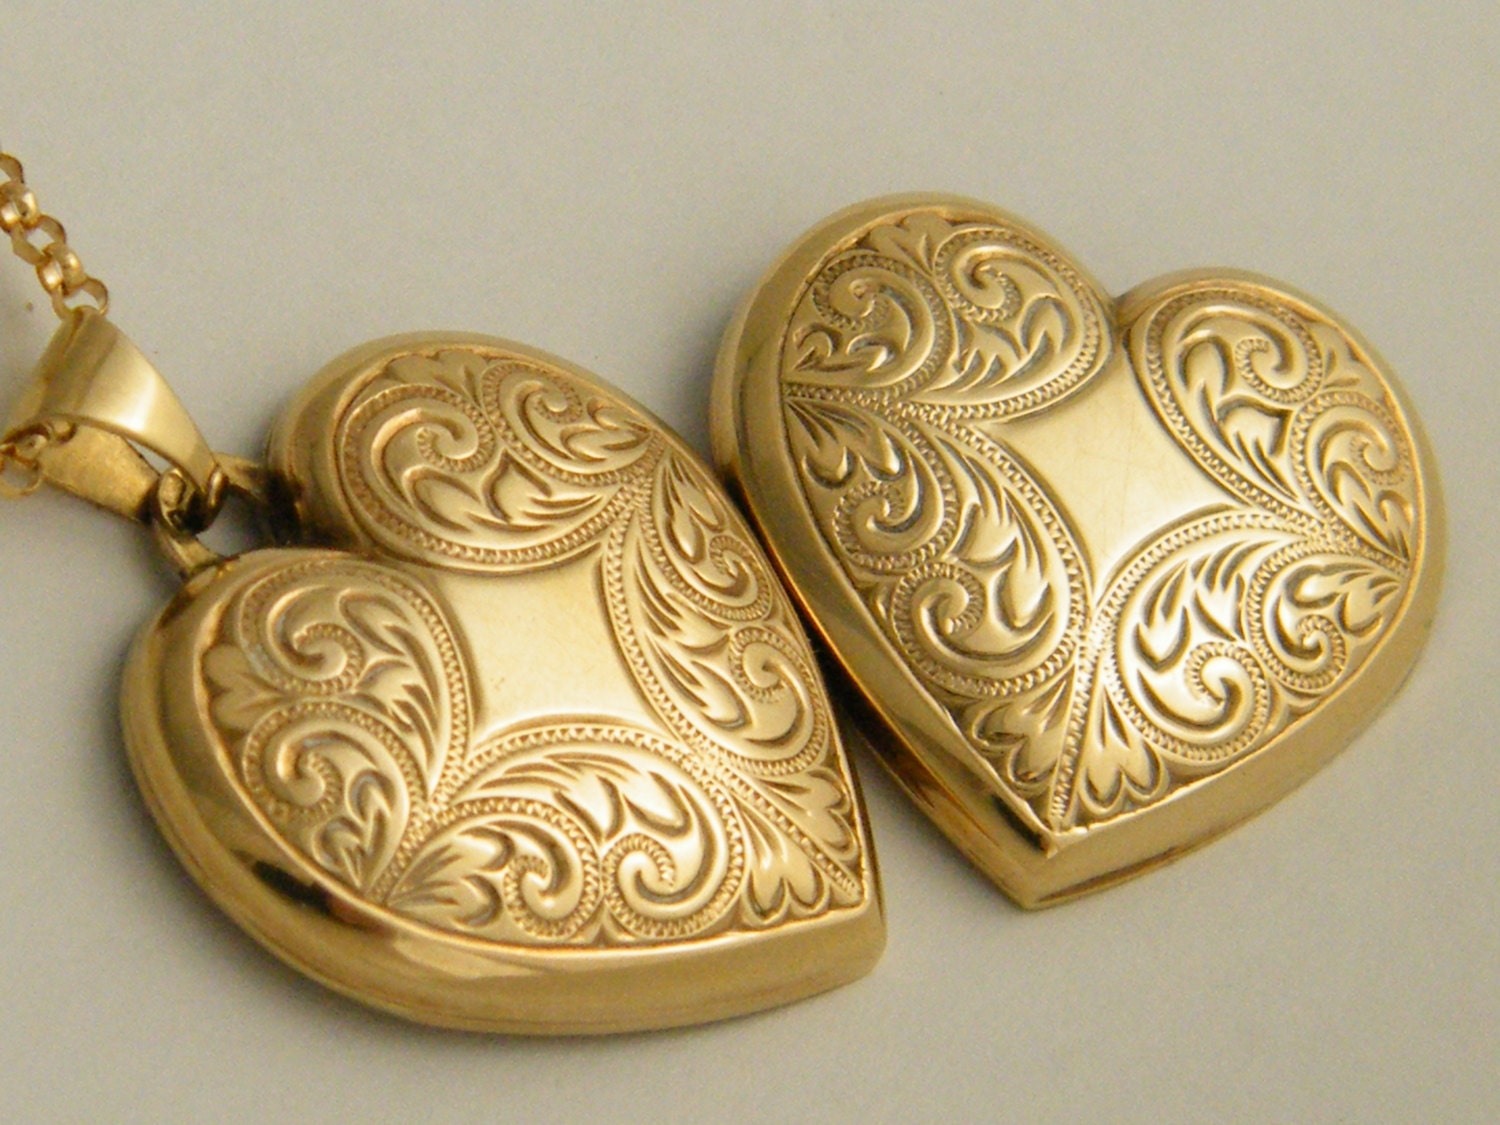 9K Vintage Gold Heart Locket with Lovely Engraving on Both sides / Vintage Locket Necklace - AntiqueLockets